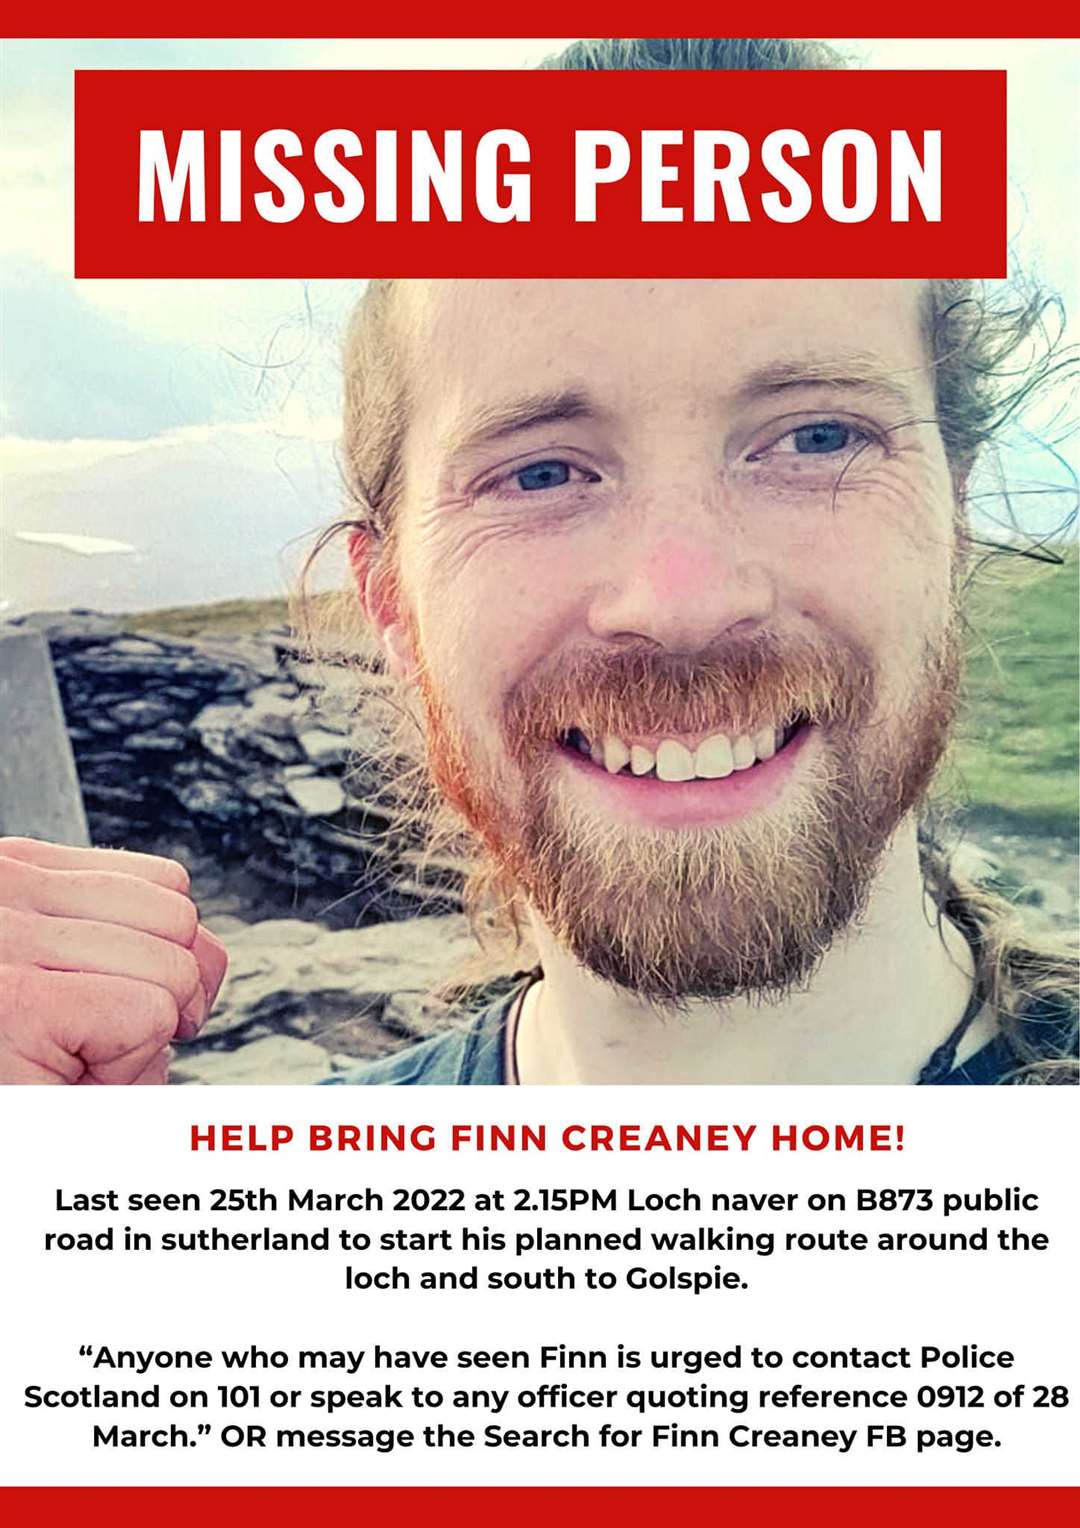 Finn Creaney went missing in March last year.